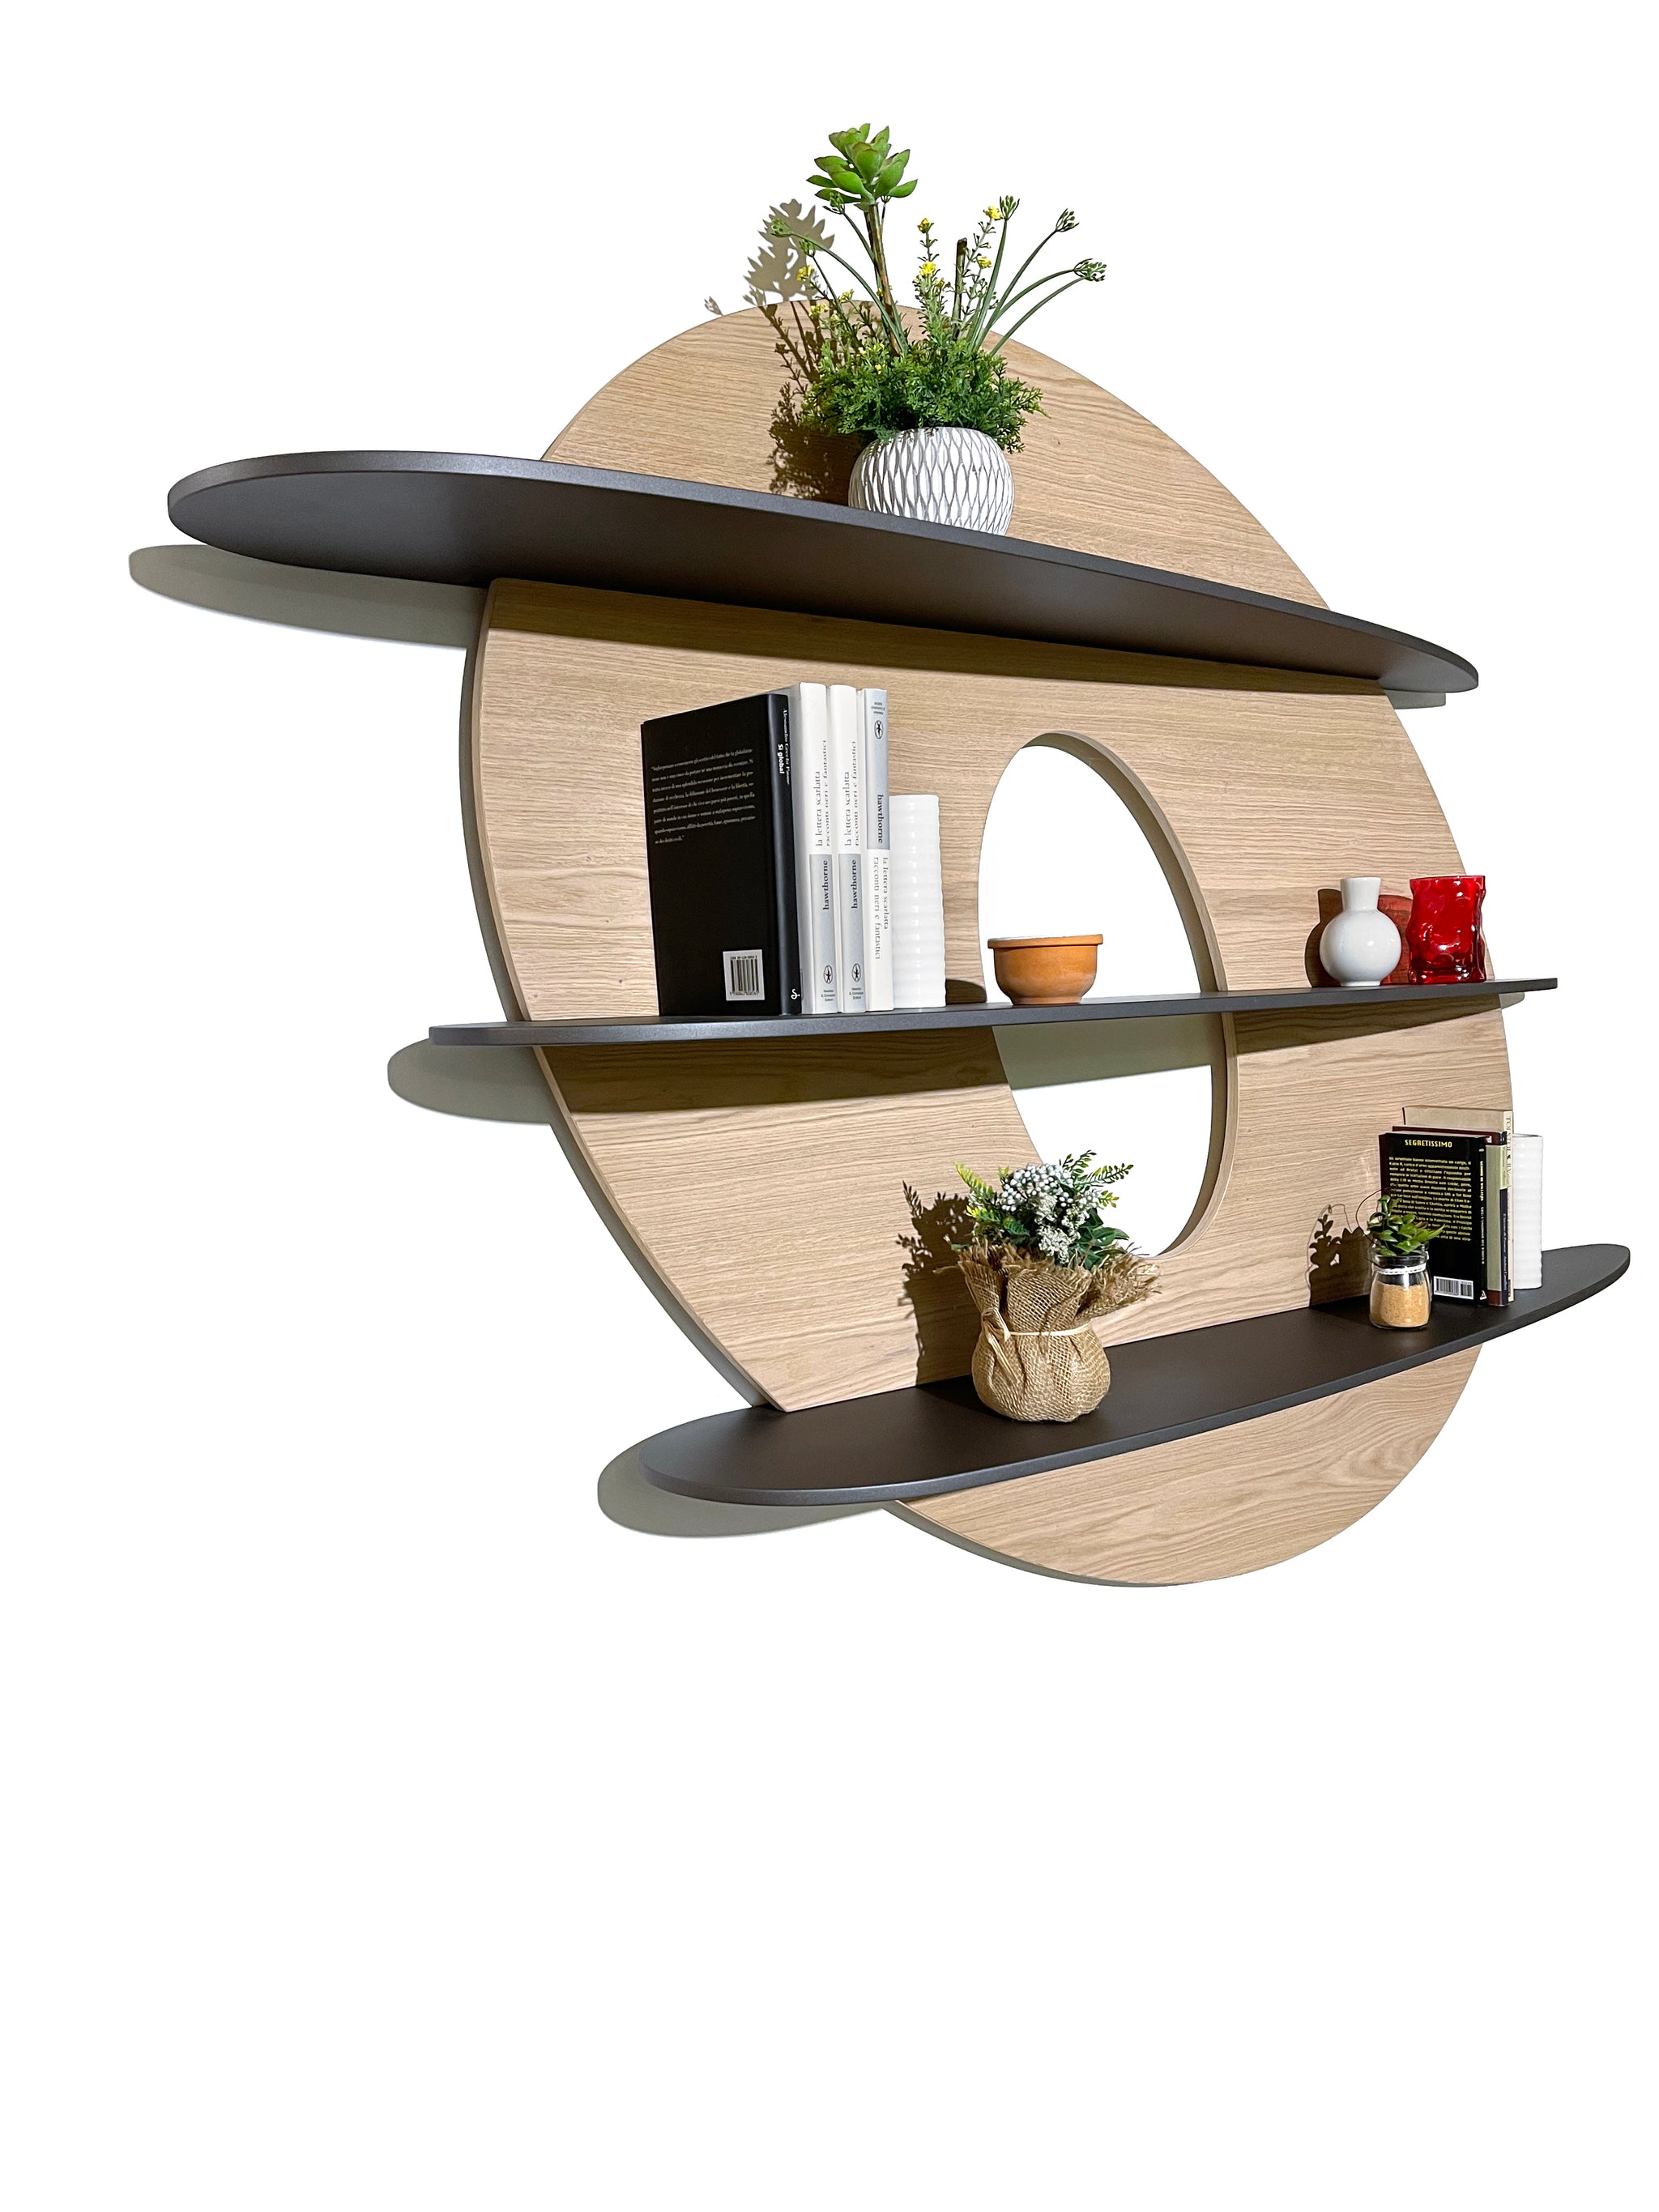 IPERBOLE Rovere Design Bookshelf by Midarte - ArosioMilano by Midarte